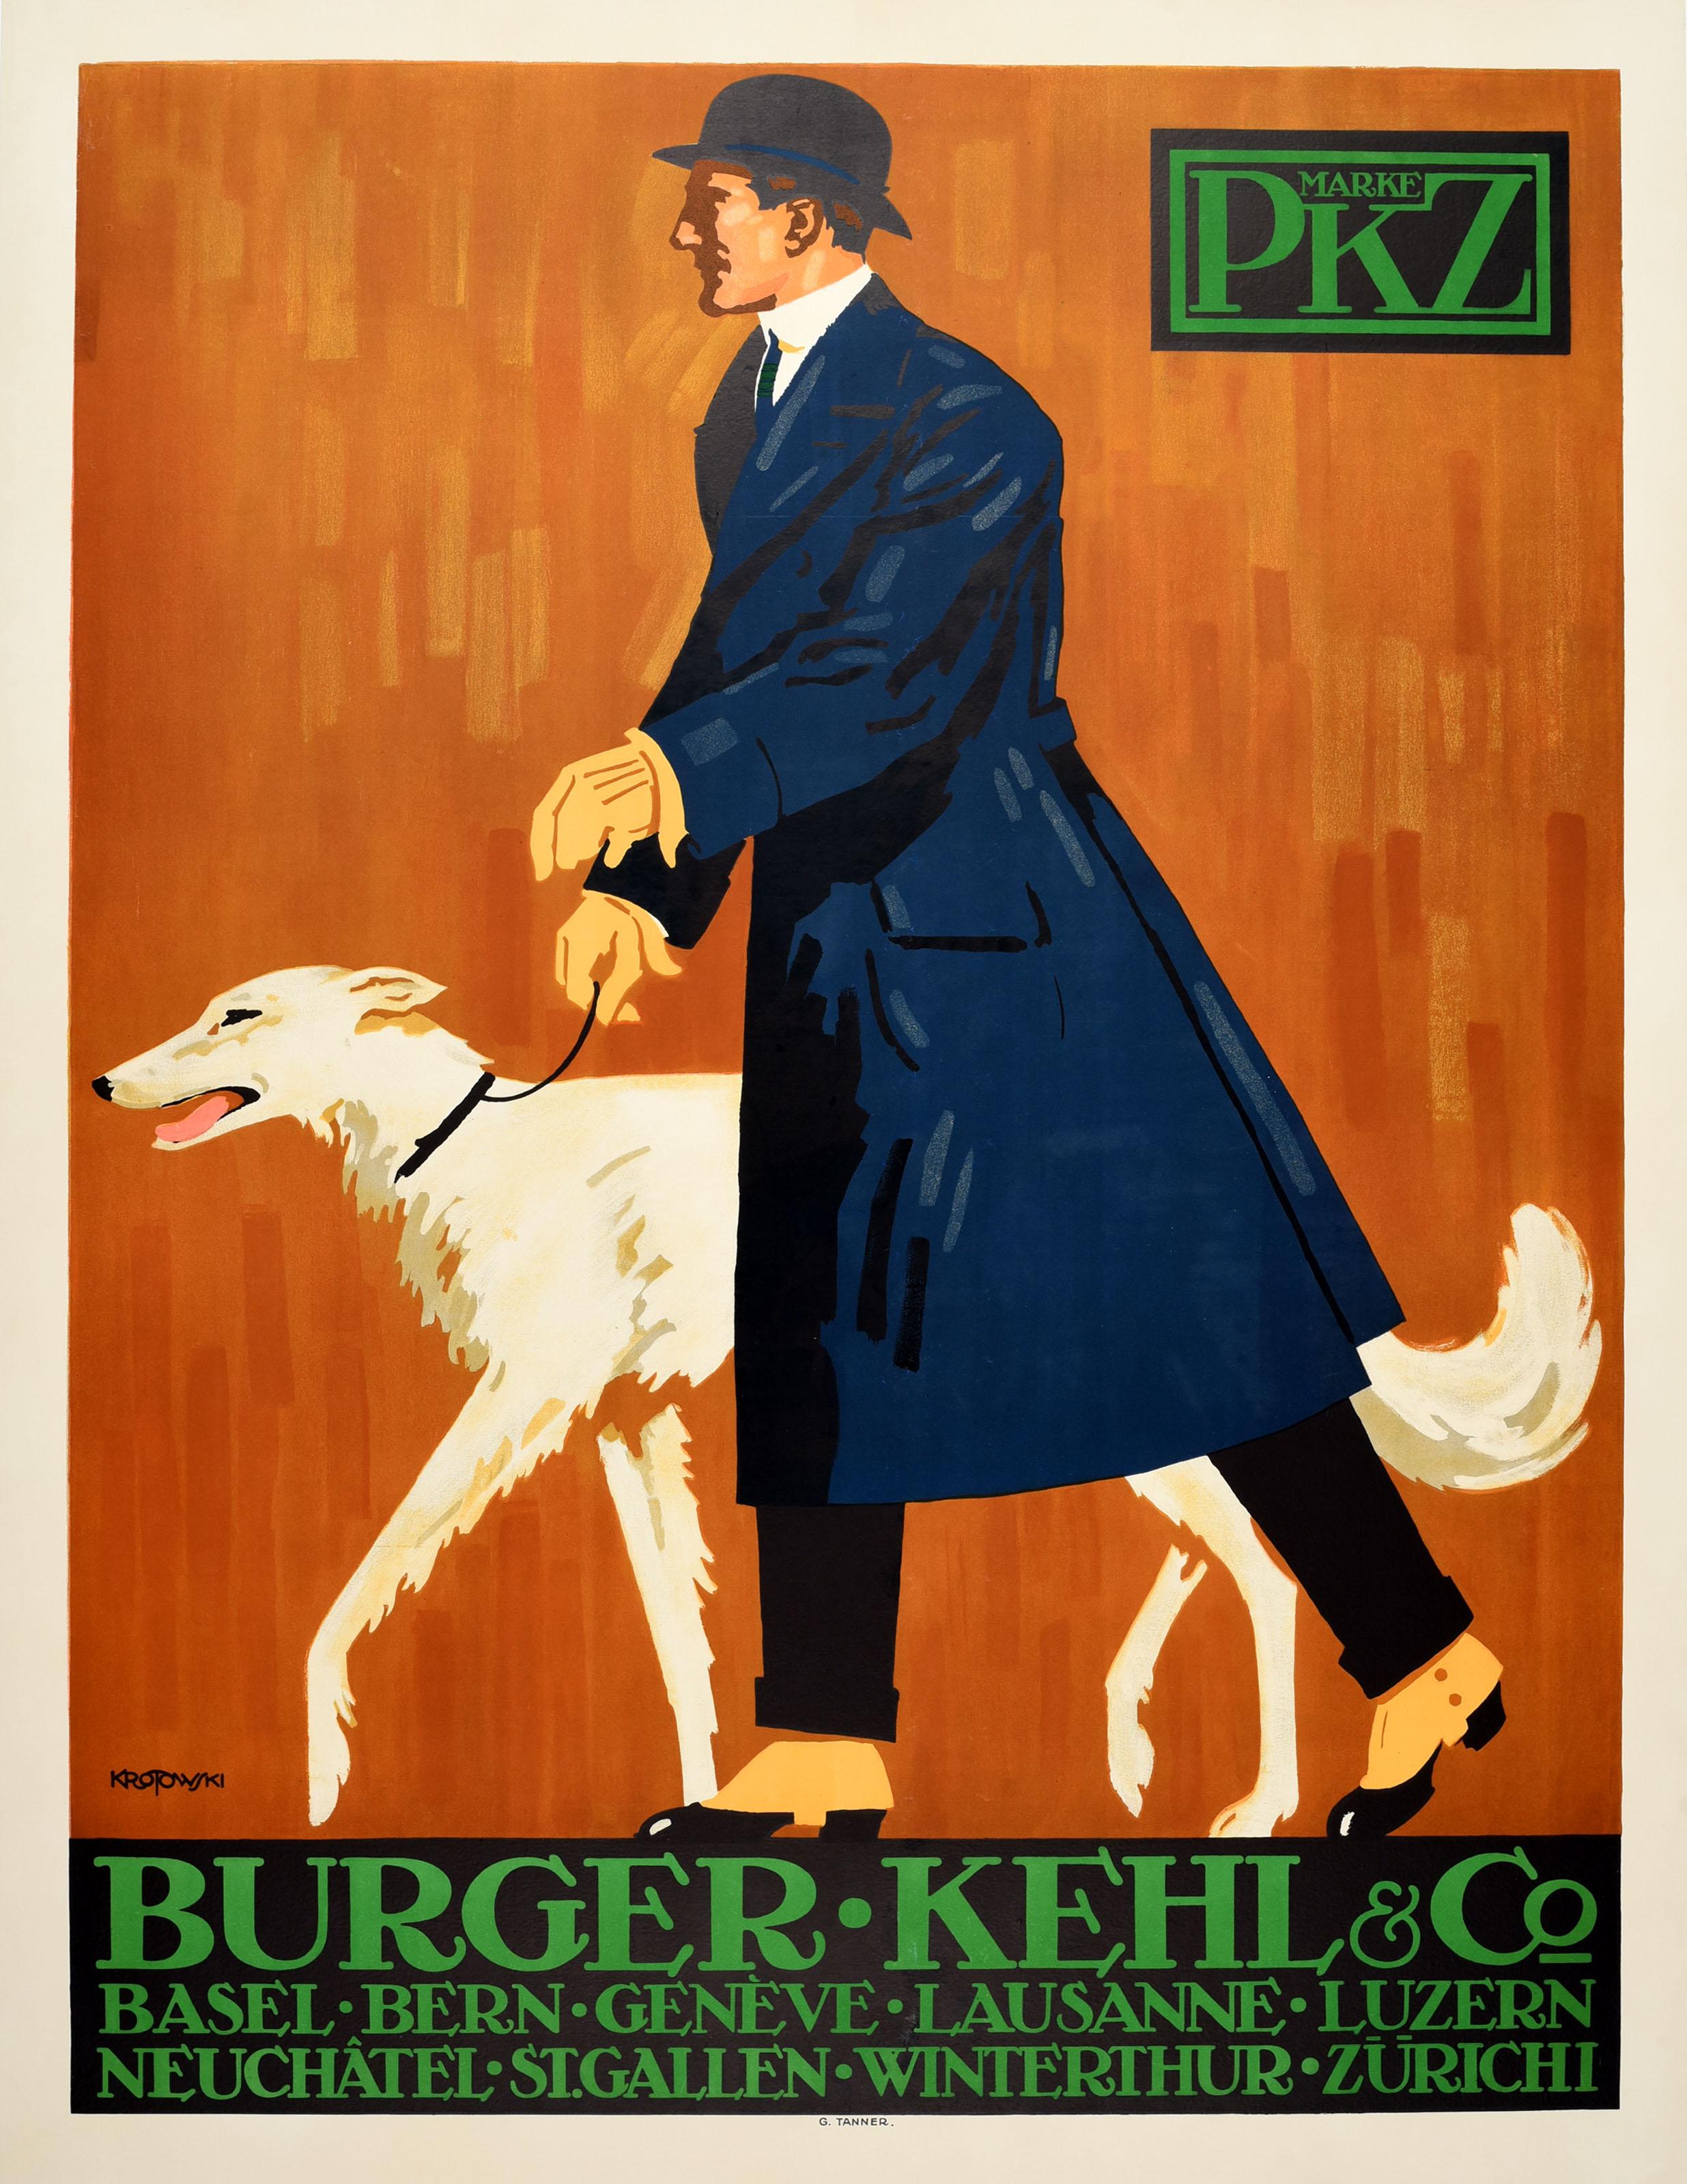 Original Antique Advertising Poster PKZ Burger Kehl & Co Men's Fashion Design